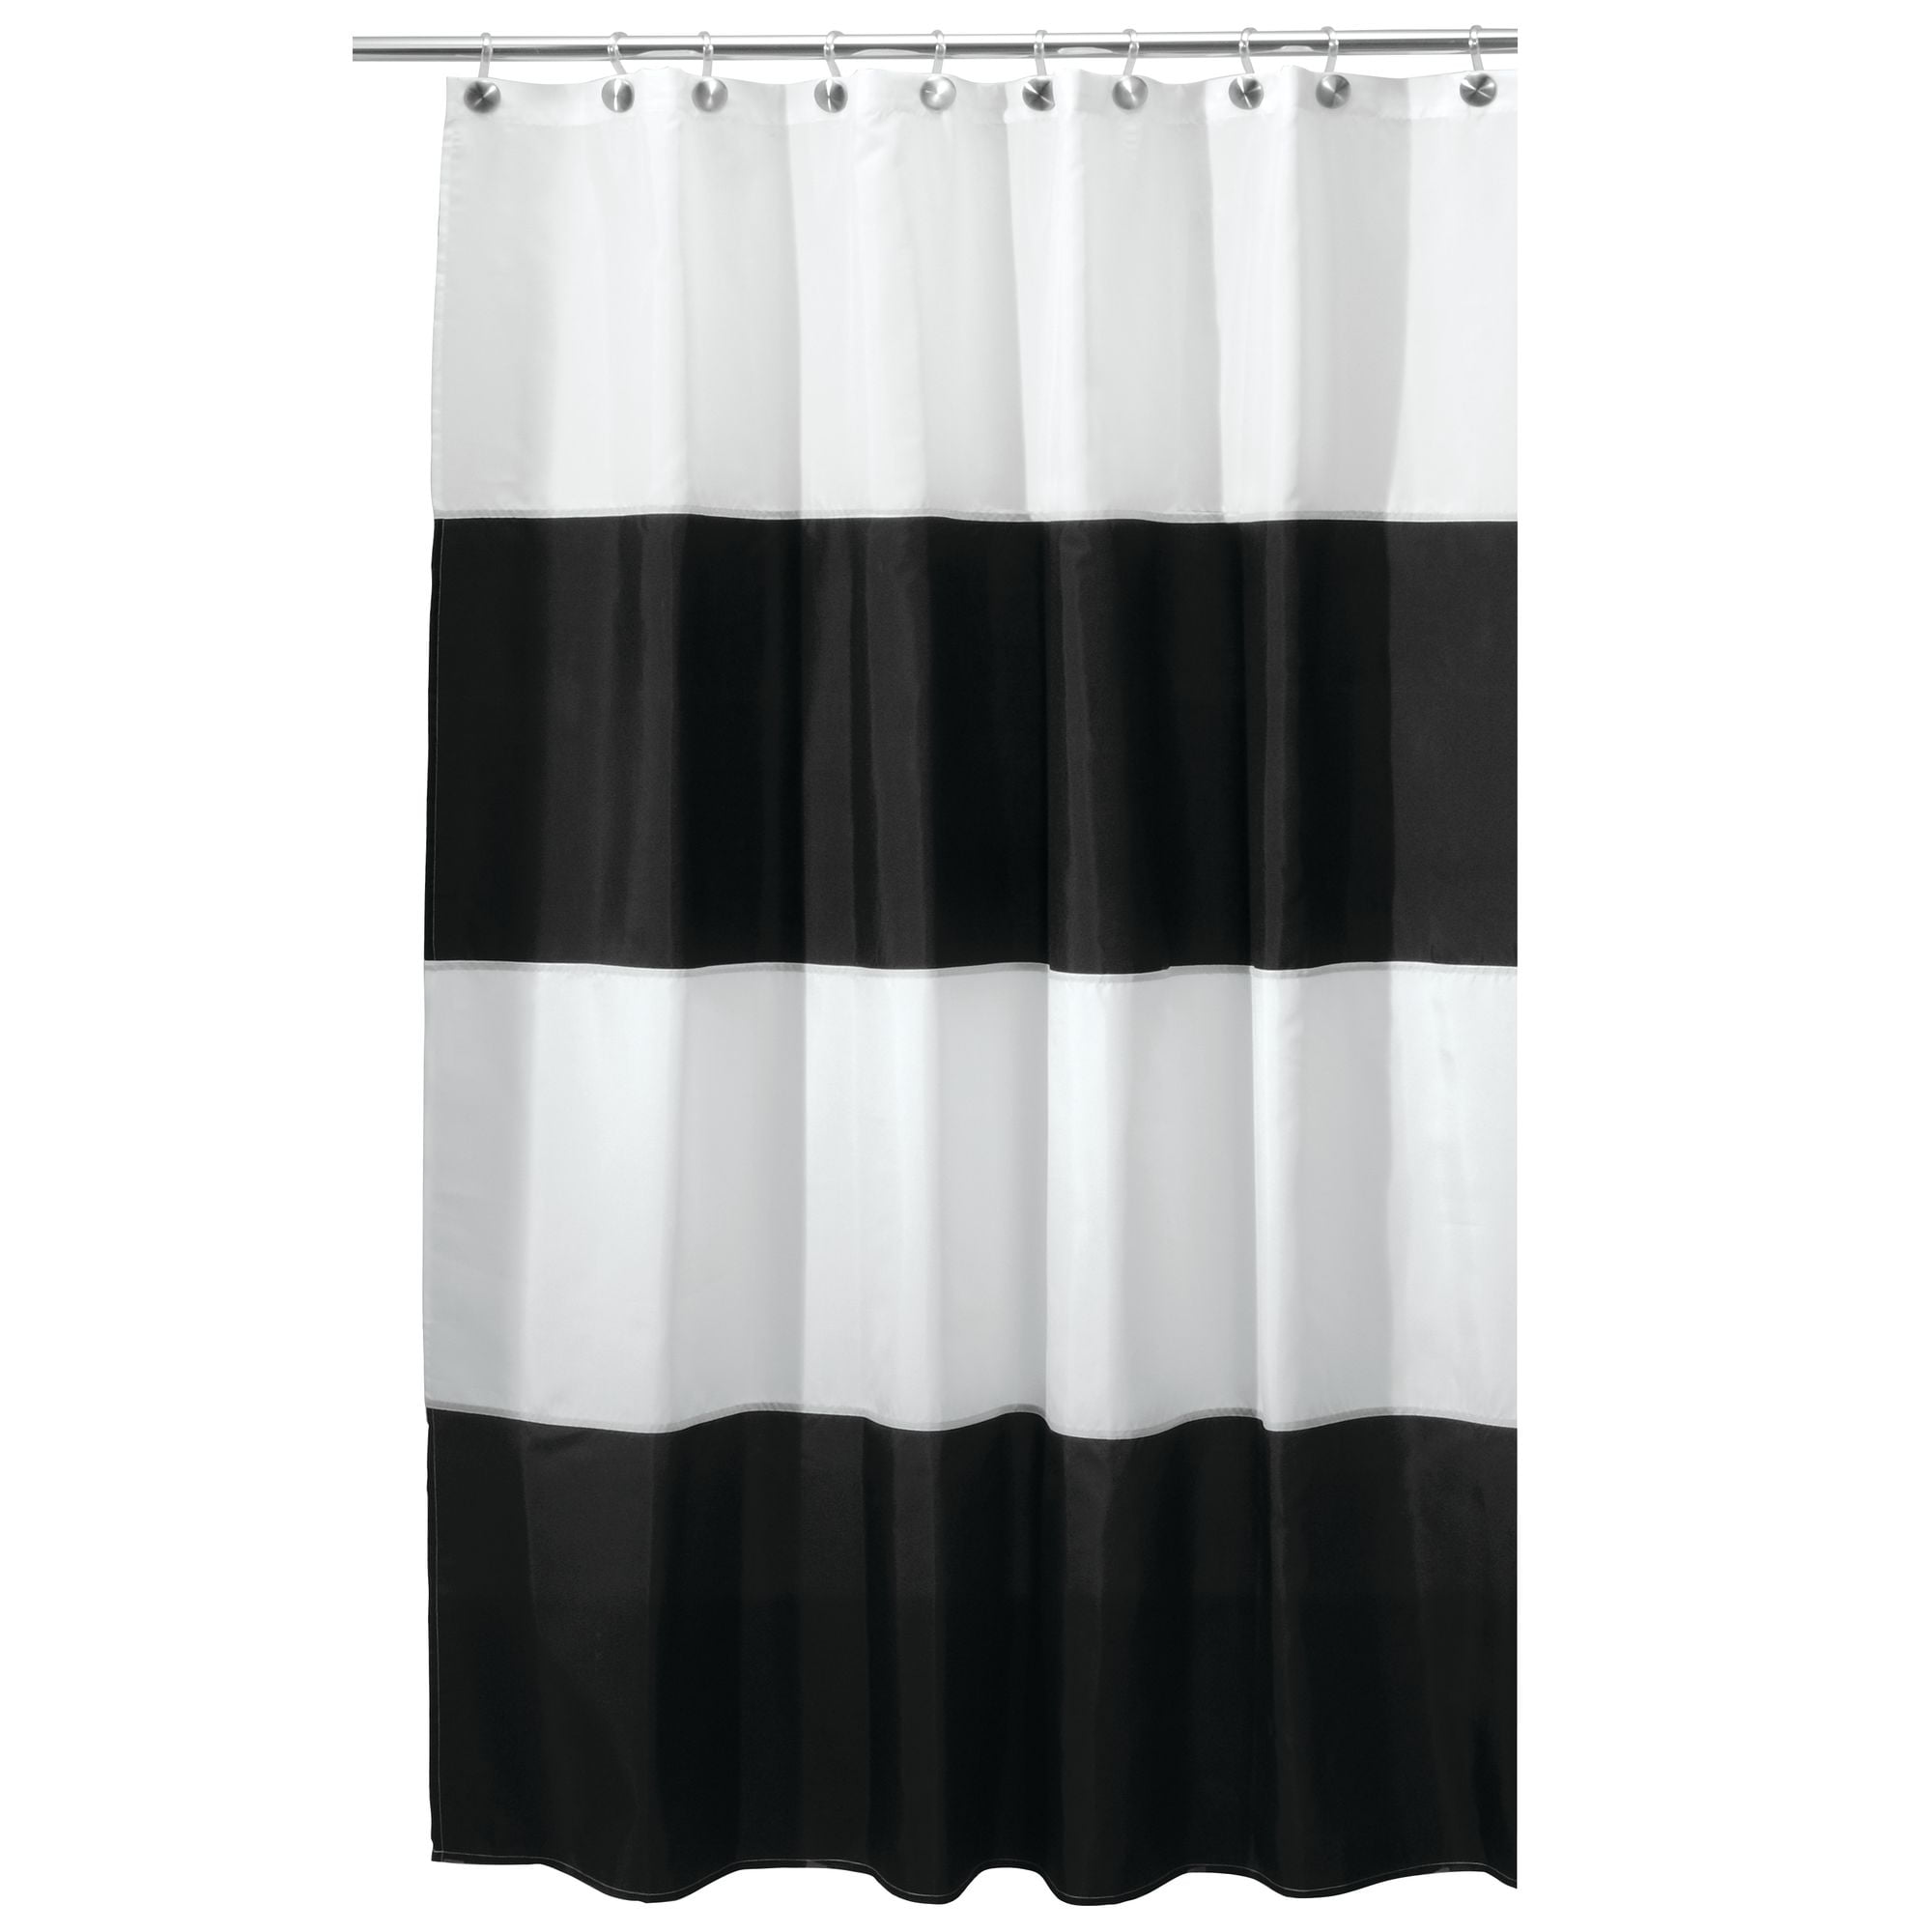 Idesign Zeno Fabric Shower Curtain, Black And White Striped Fabric Shower Curtain